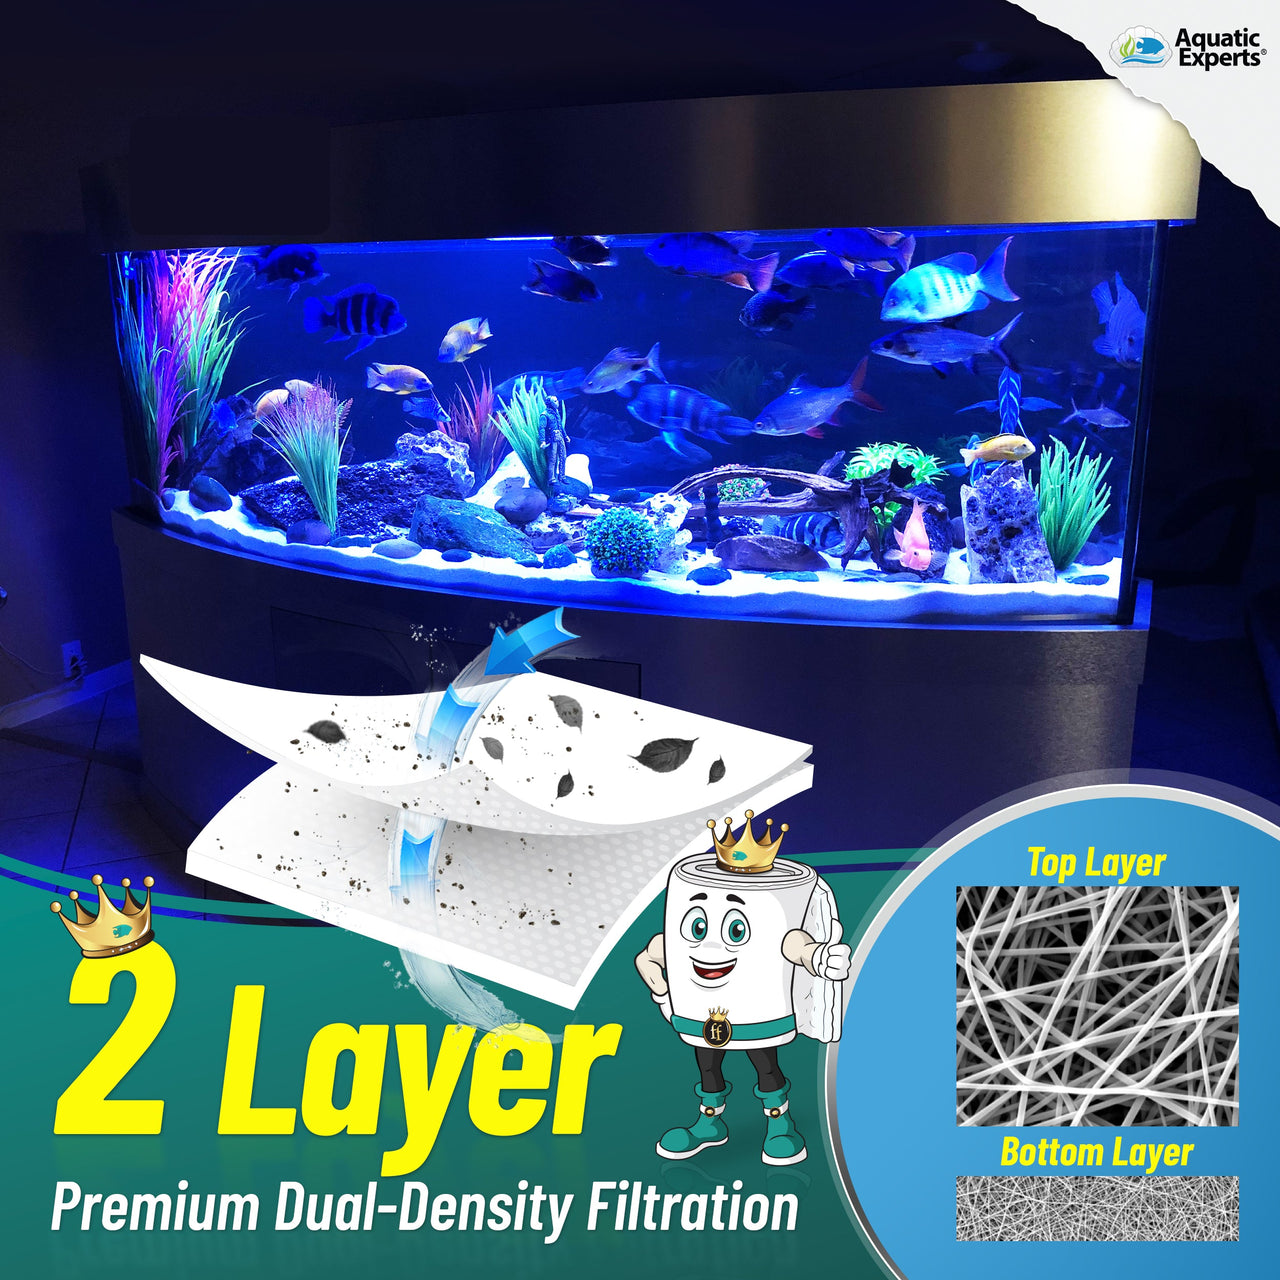 FilterFirst Premium True Dual Density Filter Media Roll - 12" X 72" X .75" Filter Pad Aquatic Experts 